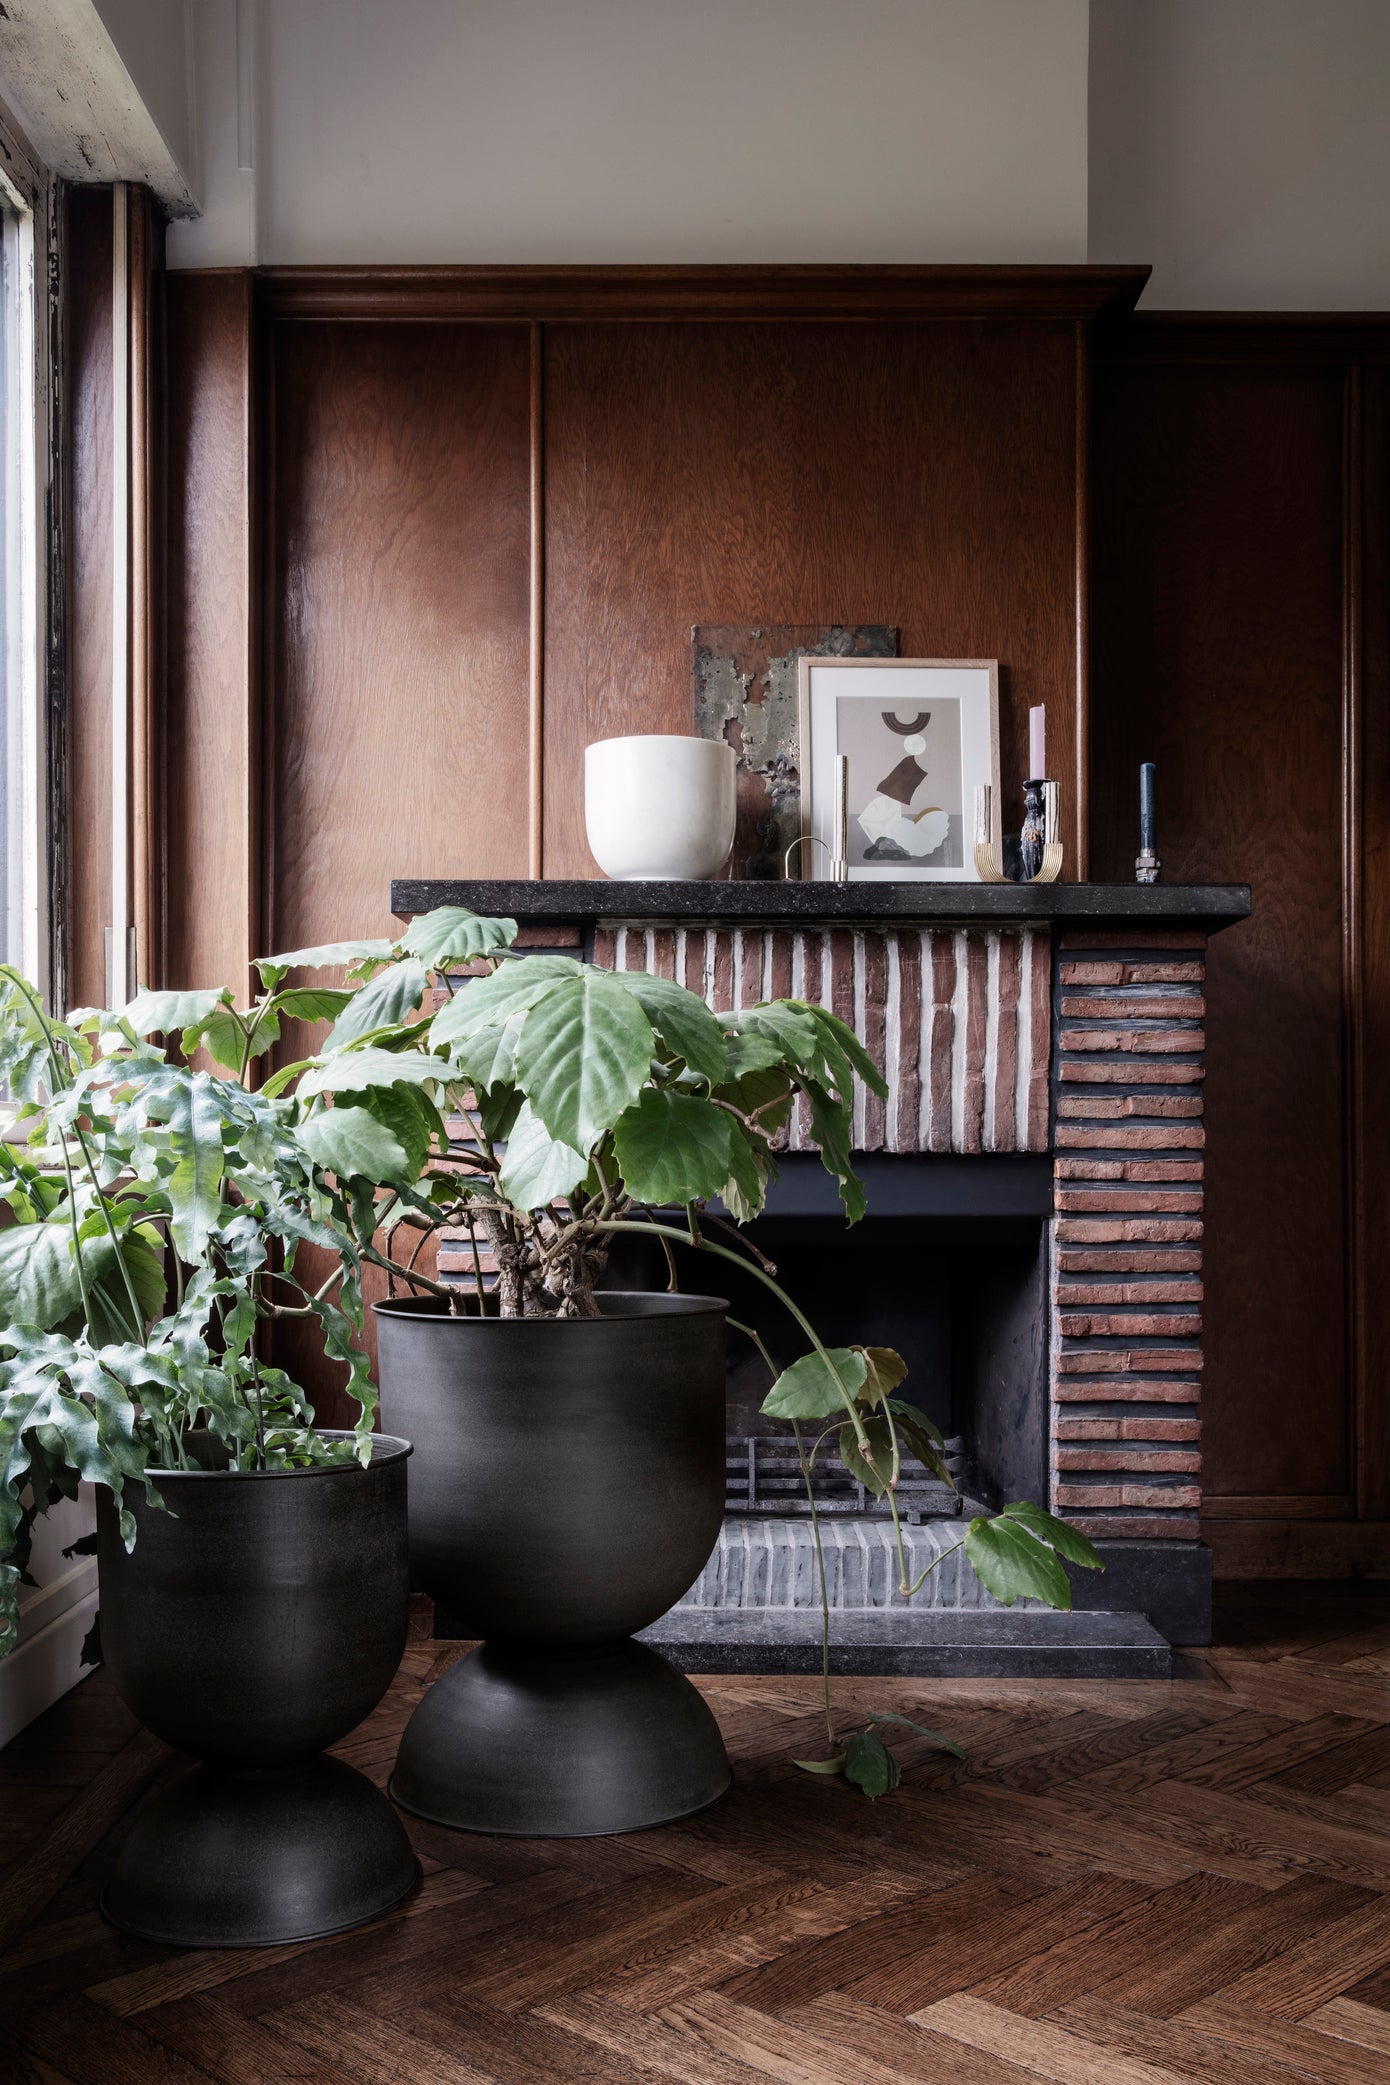 Hourglass Plant Pot | Medium | Black | by ferm Living - Lifestory